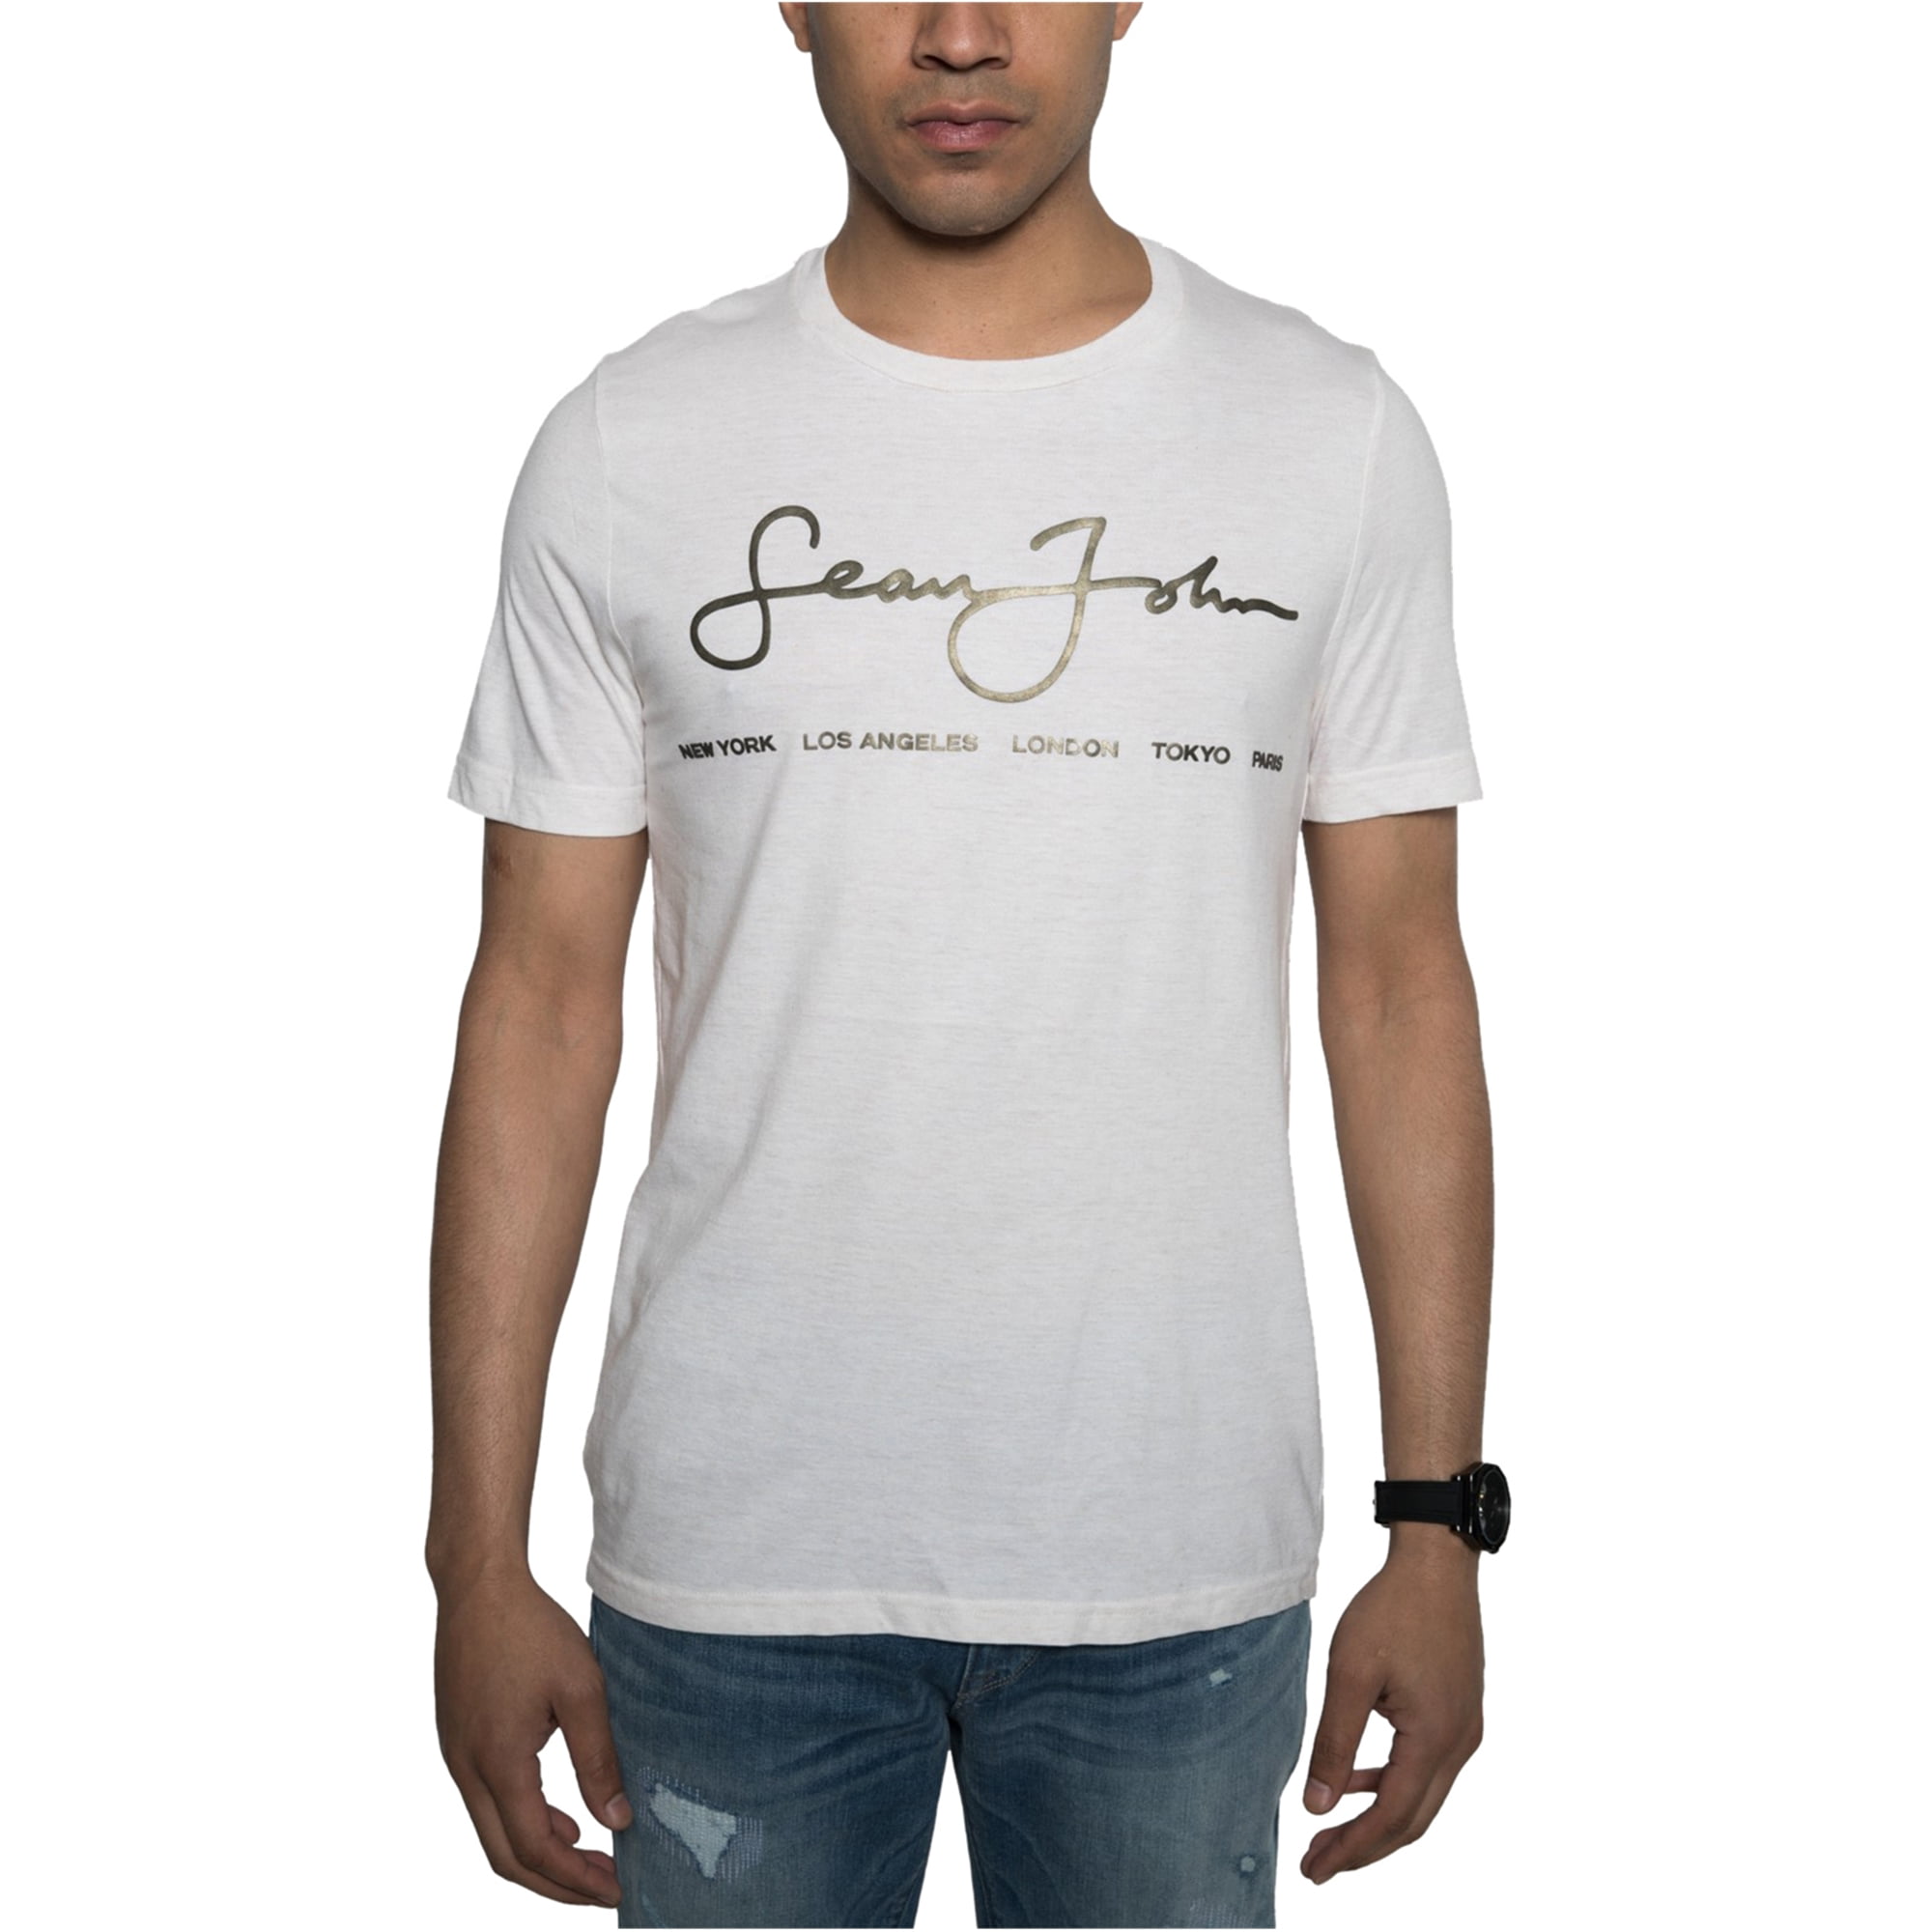 New $99 Sean John Mens White Logo Short-Sleeve Crew-Neck Tee T-Shirt Size 3xl 